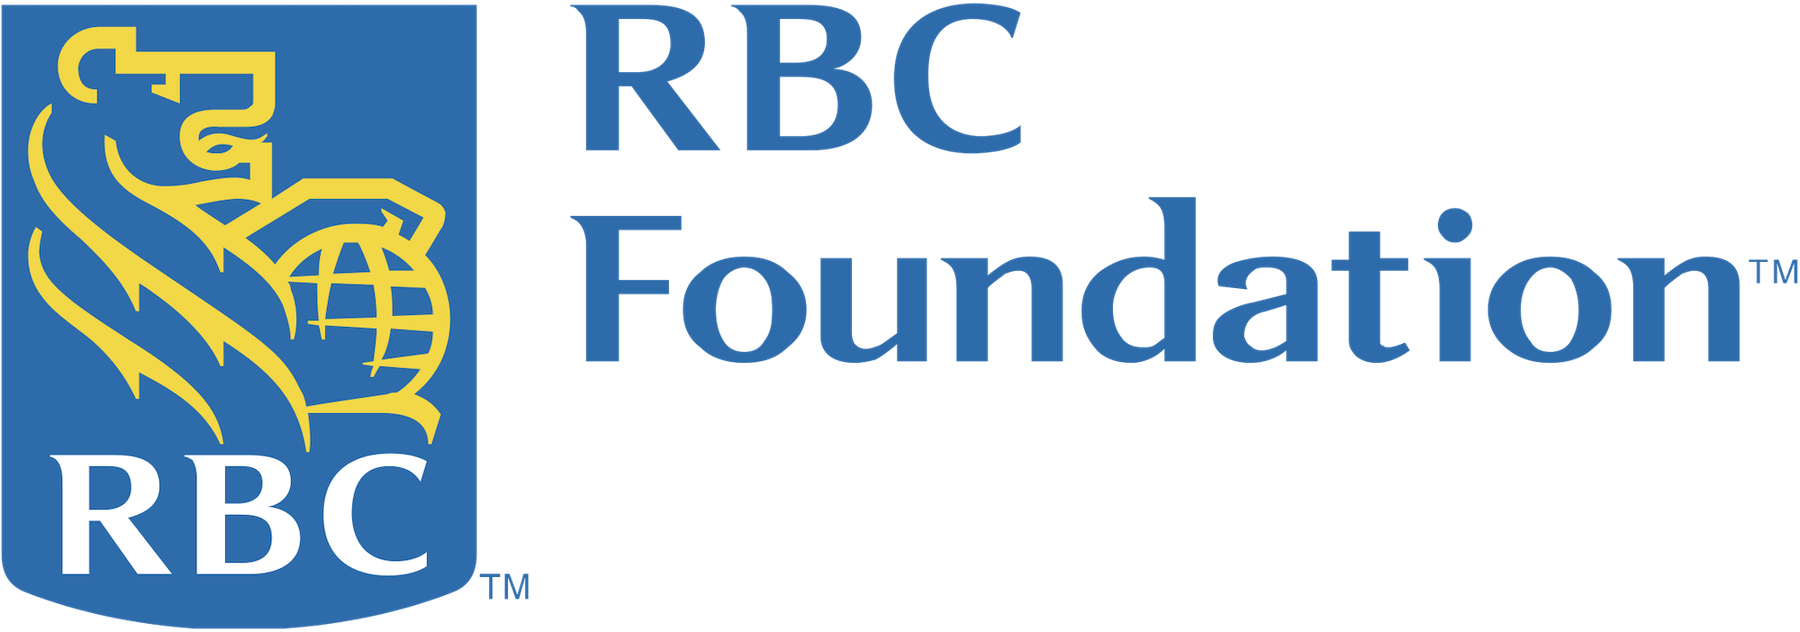 RBC Foundation logo on a transparent background.